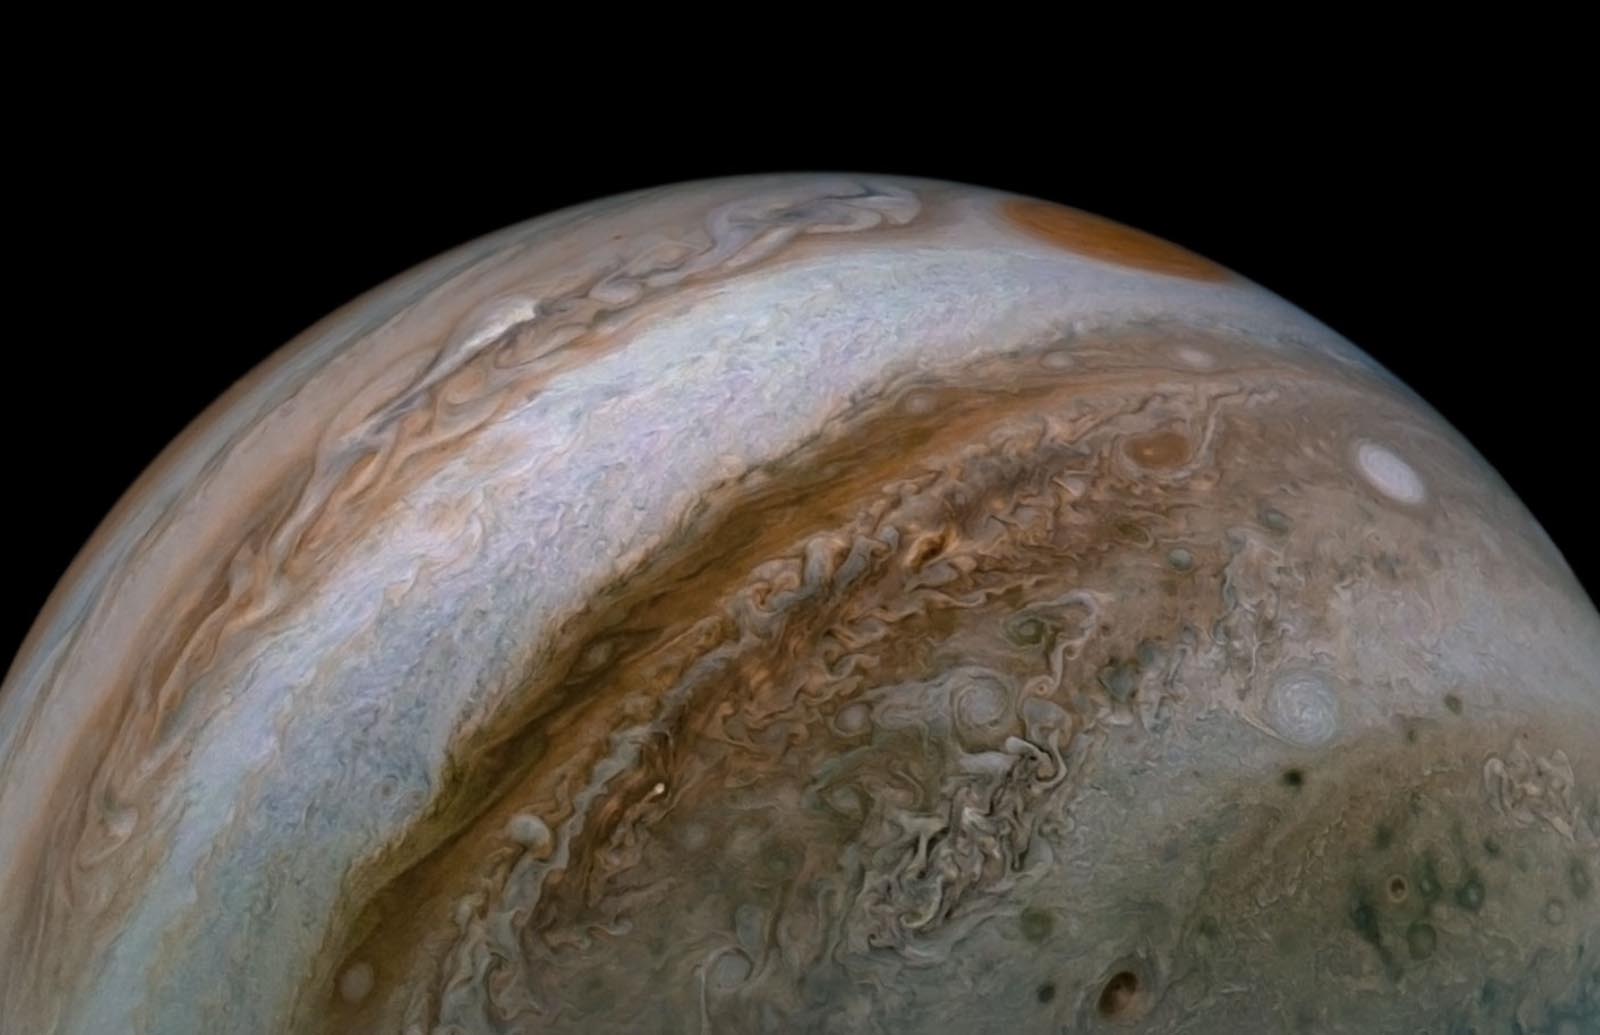 This new Jupiter photo is just plain BGR